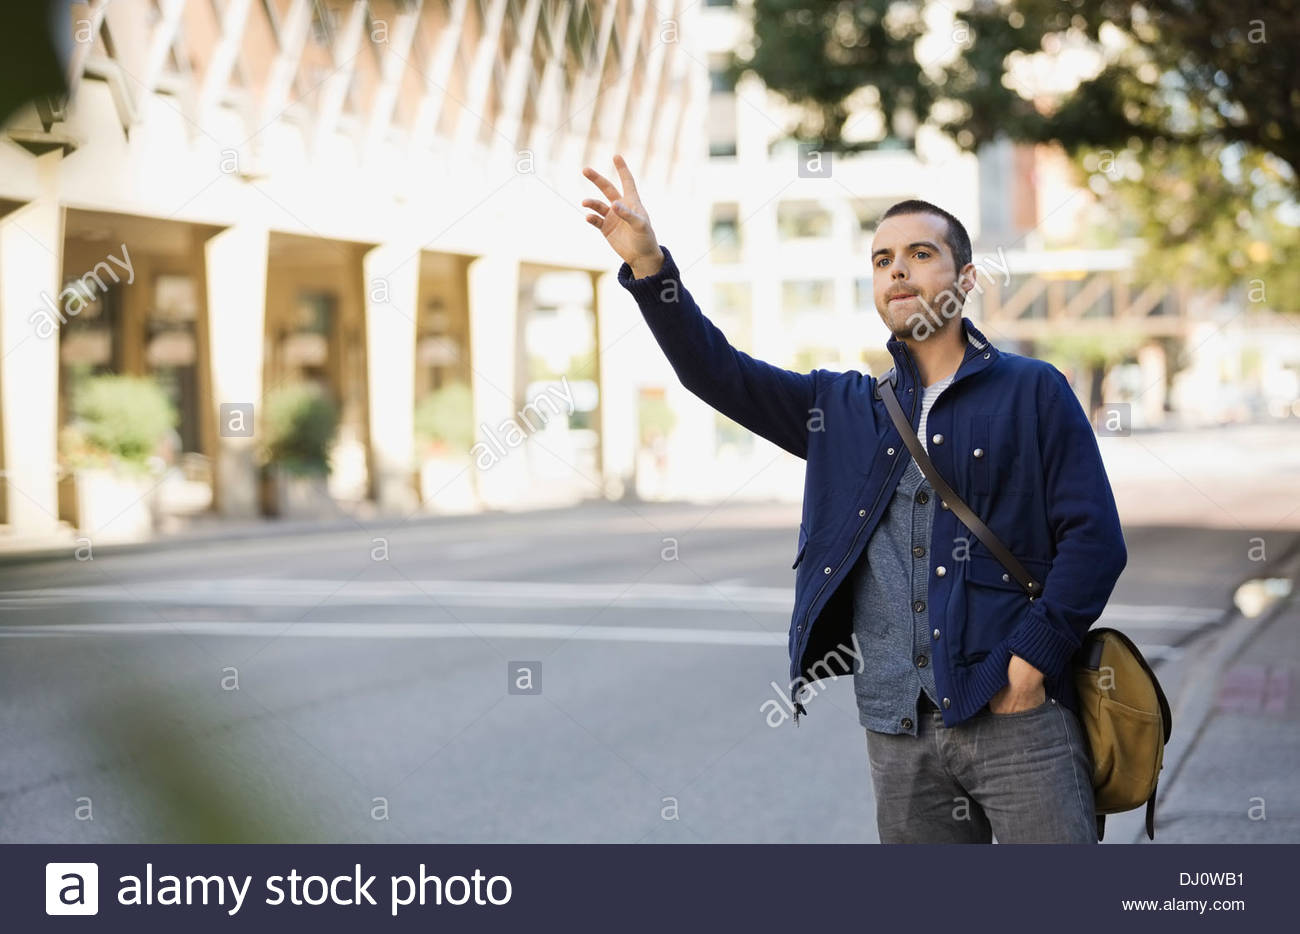 Man hailing taxi on city street Stock Photo